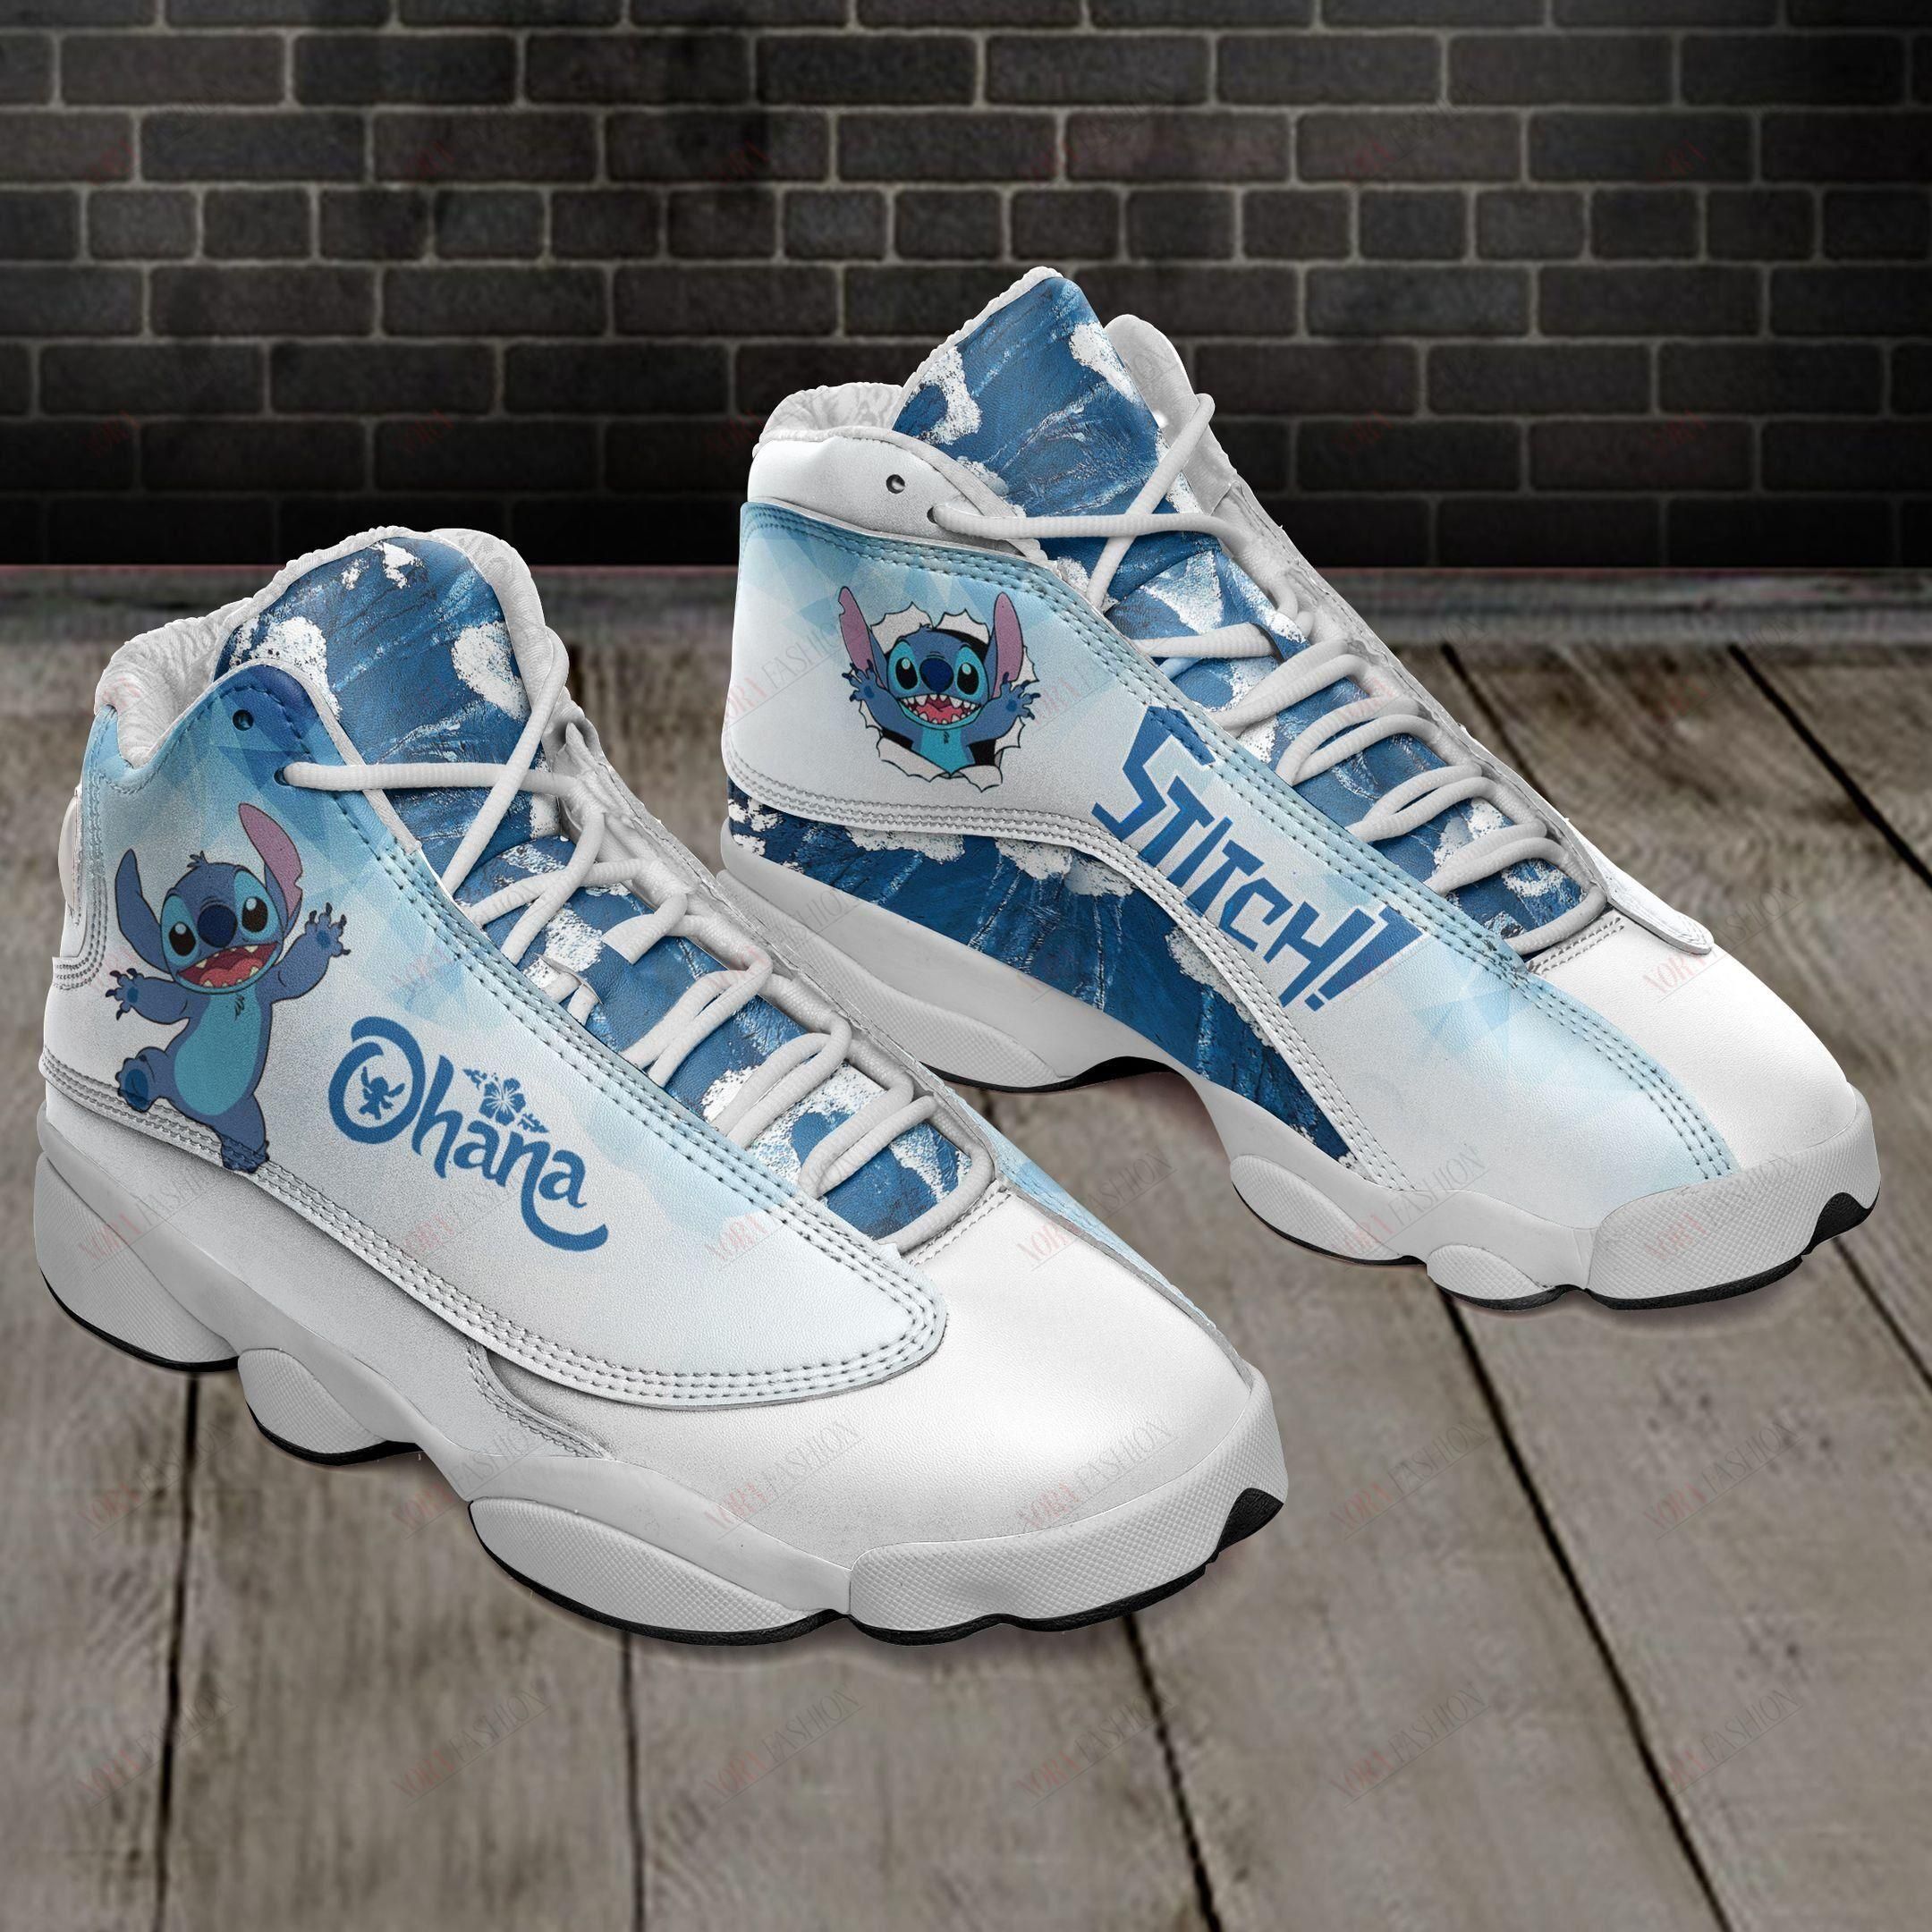 Stitch ohana air jordan 13 sneakers sport shoes - 1:1